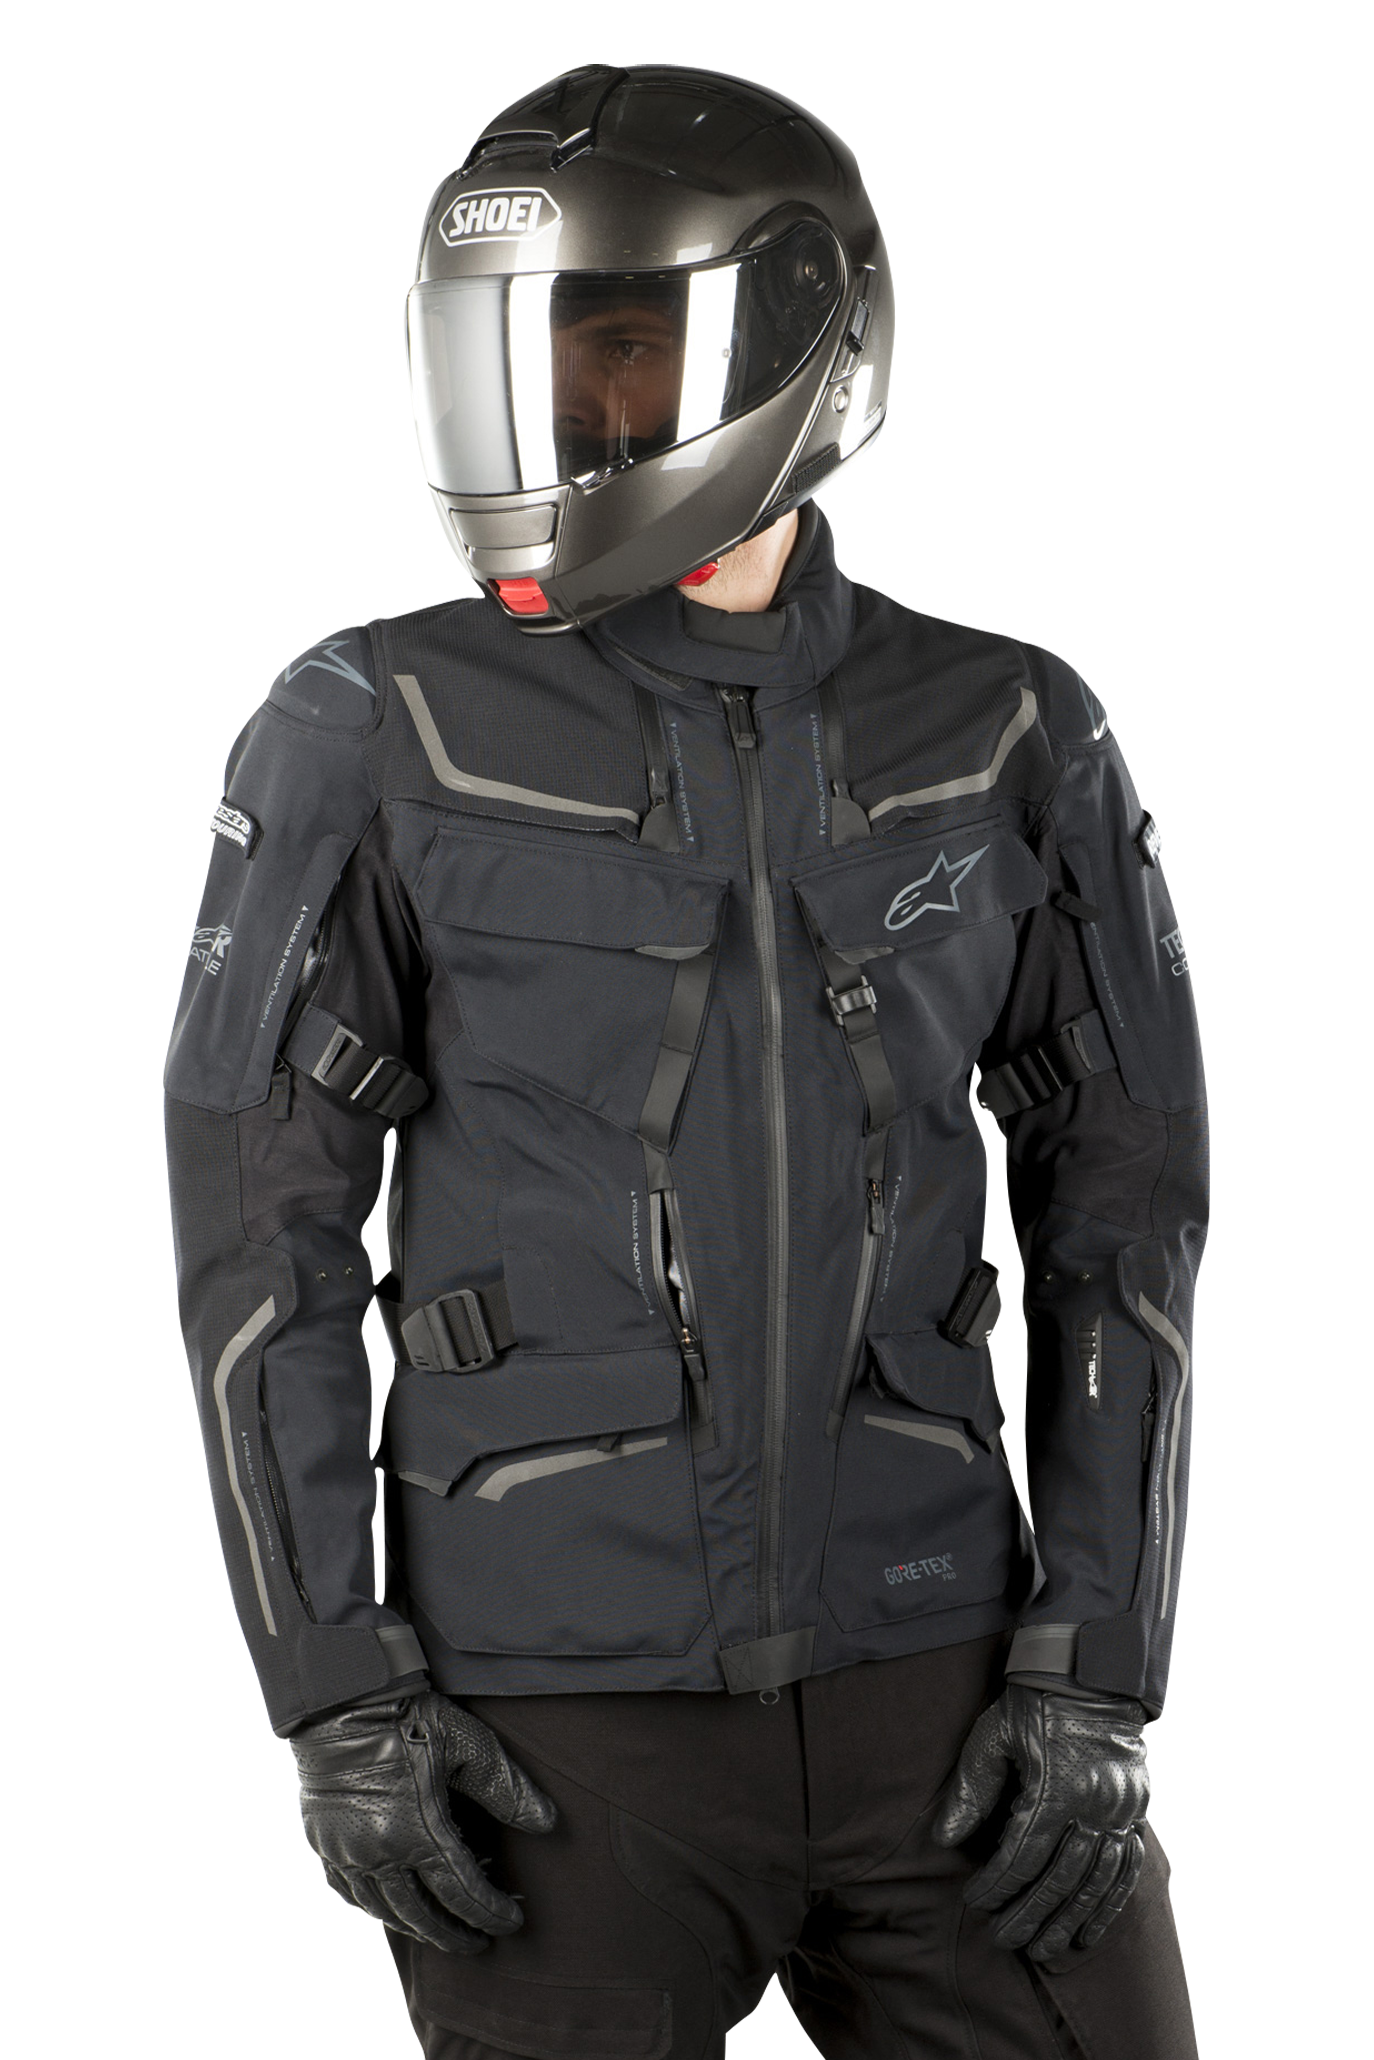 MISSILE IGNITION Black Leather Suit - TECH-AIR ® Compatible